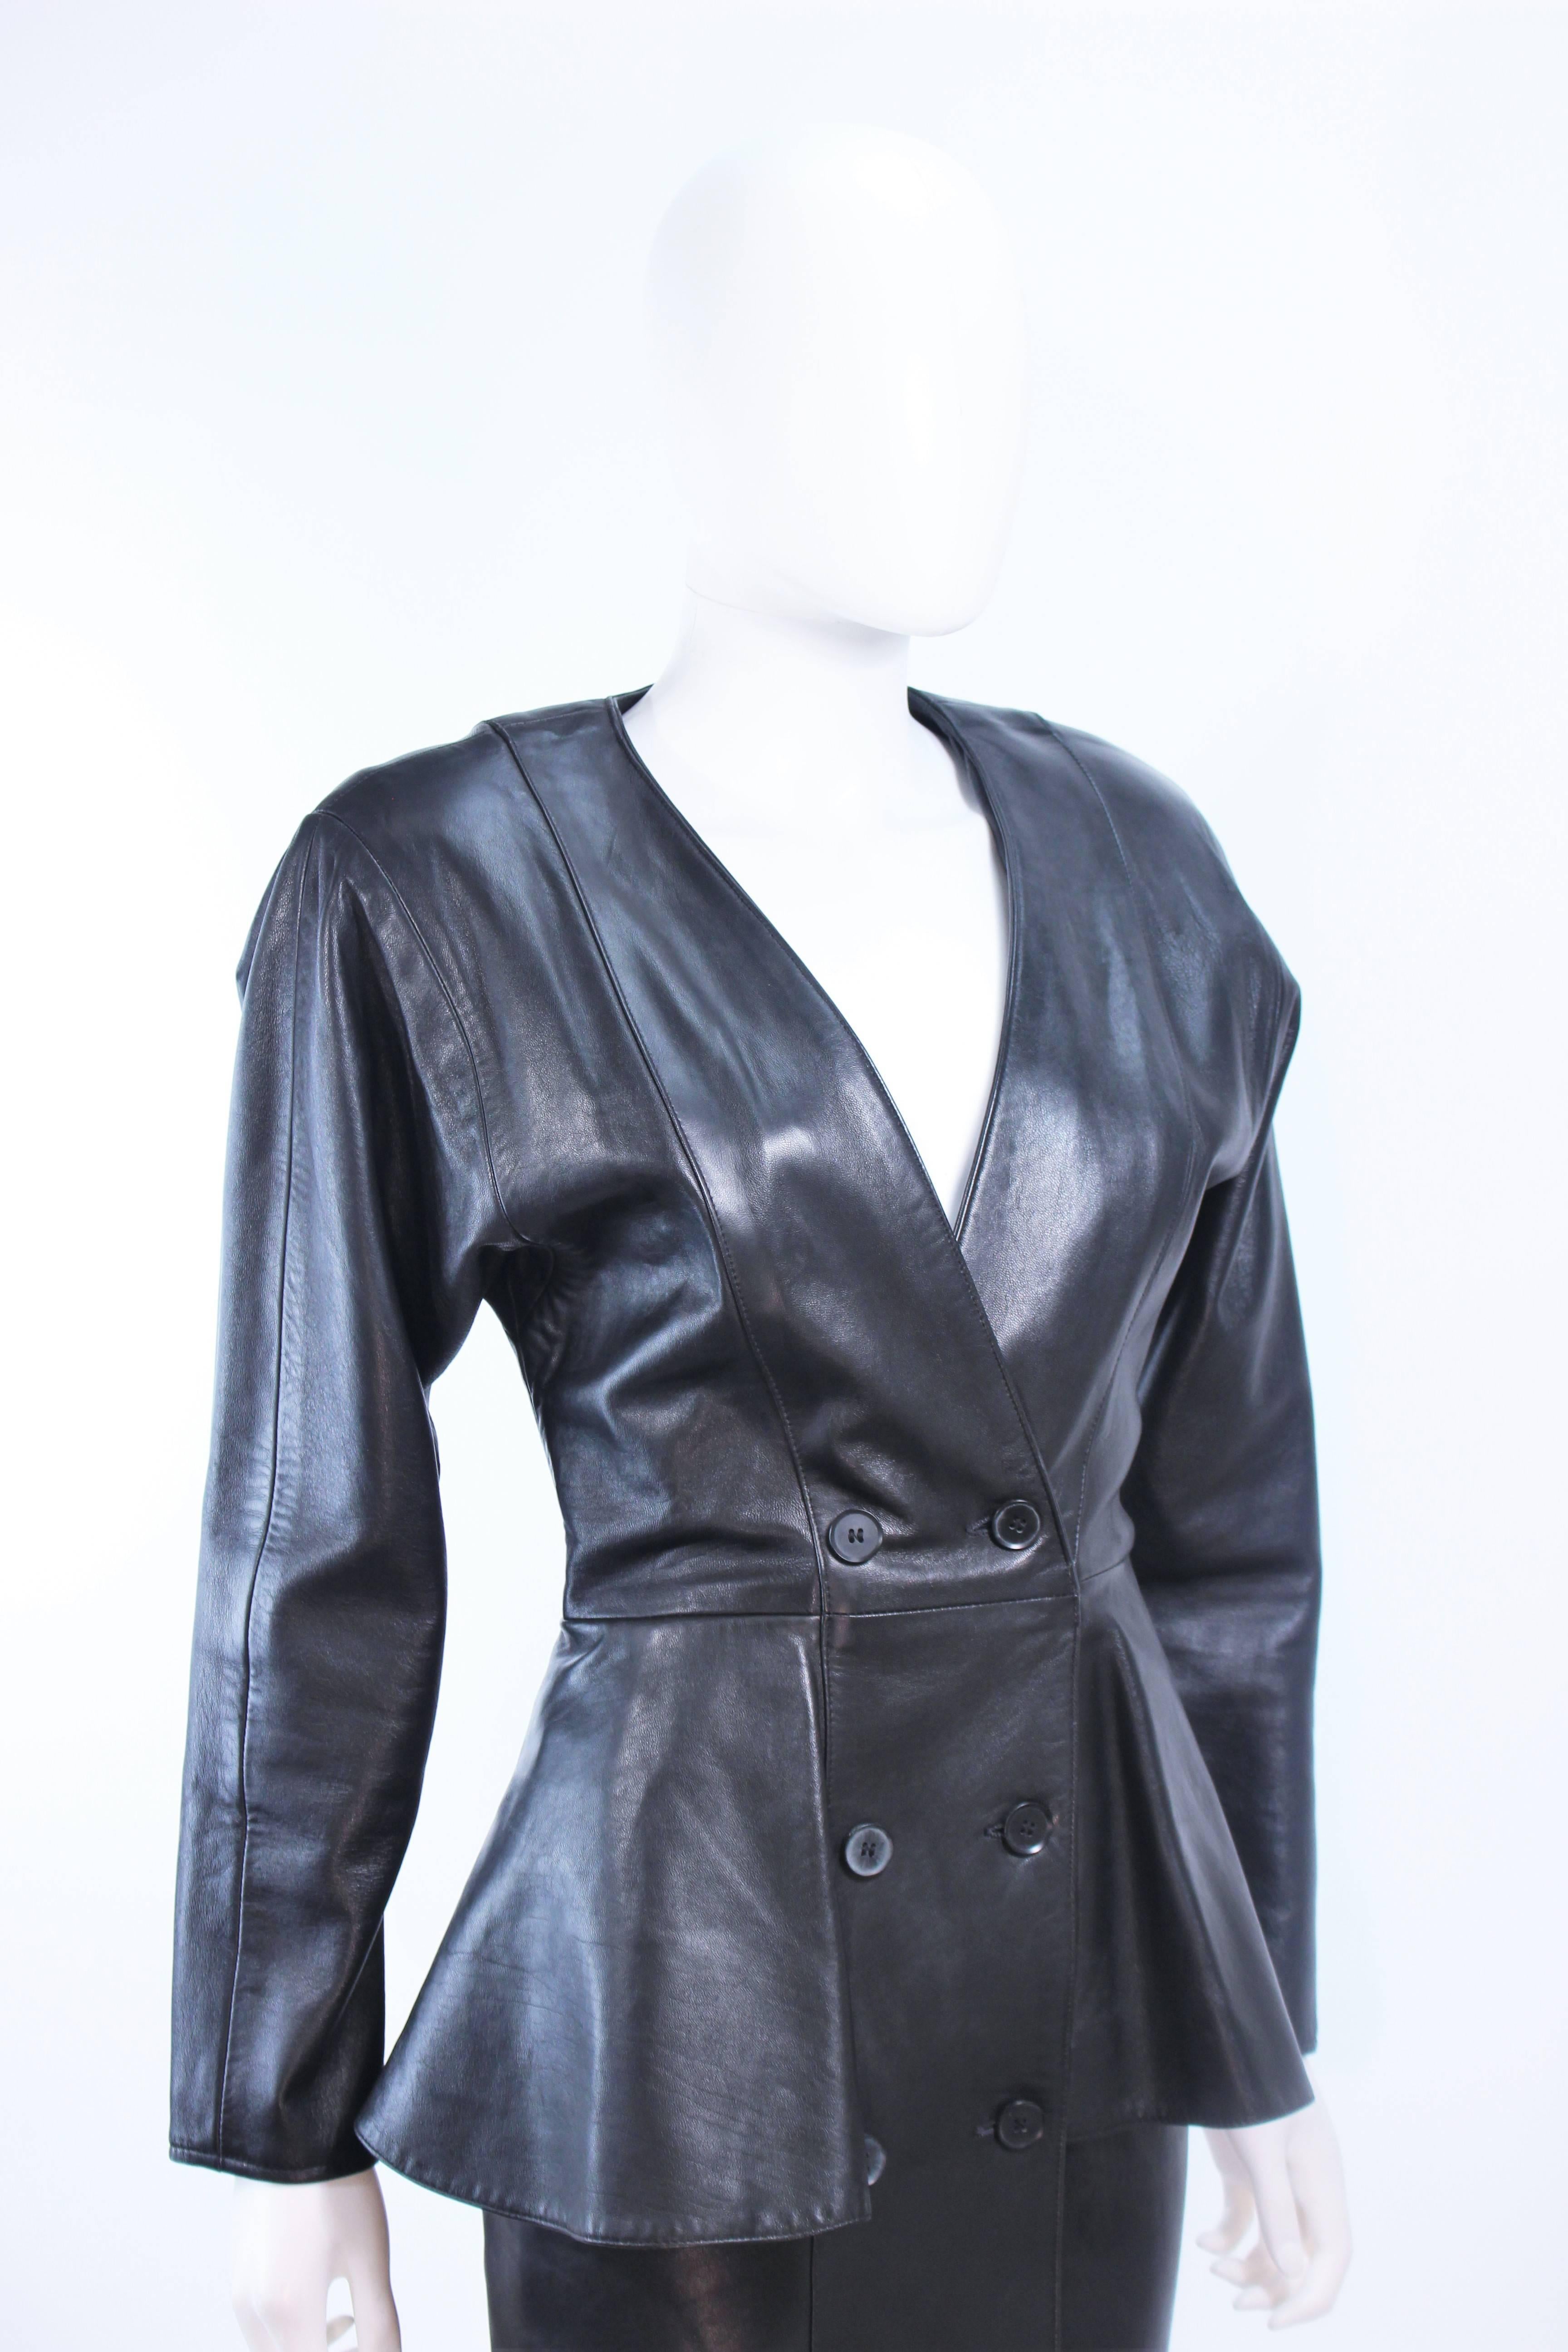 Women's VAKKO Black Leather Dress with Peplum Size 8